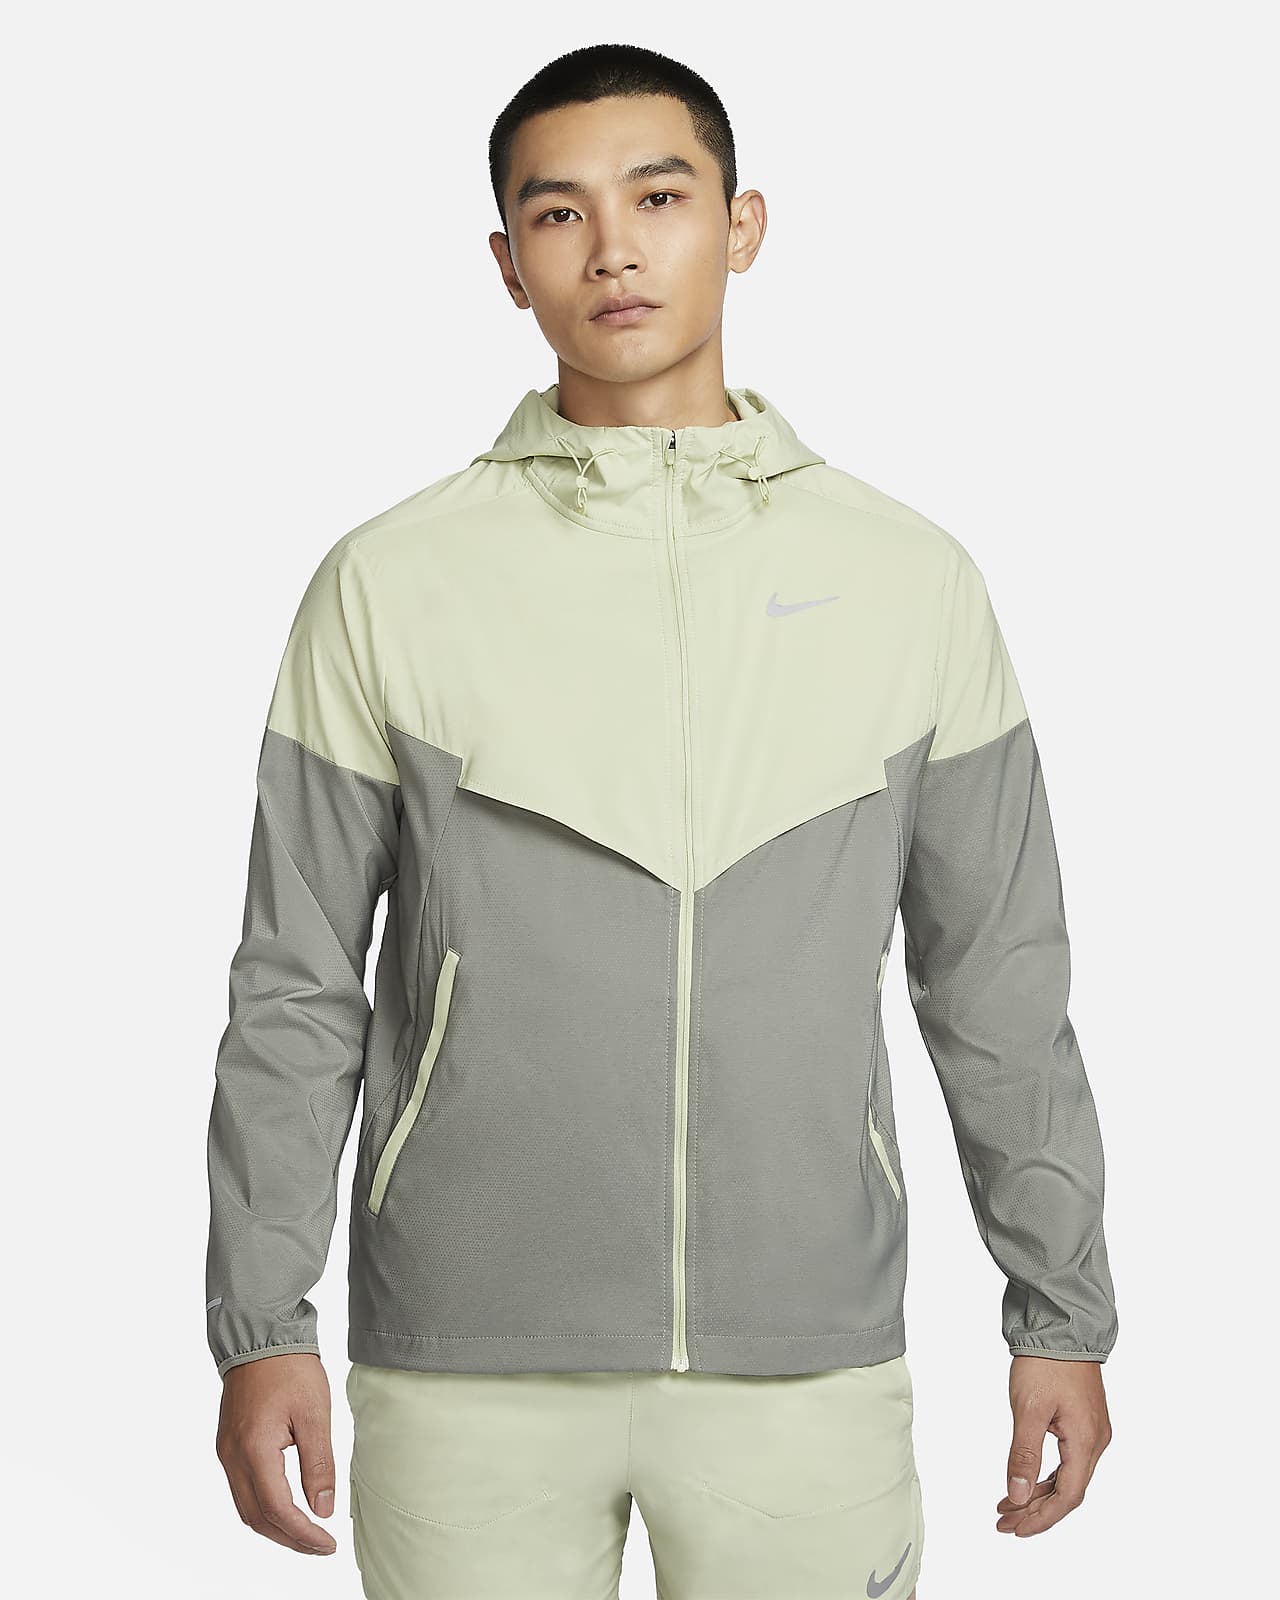 Men Casual Nike Jackets - Buy Men Casual Nike Jackets online in India